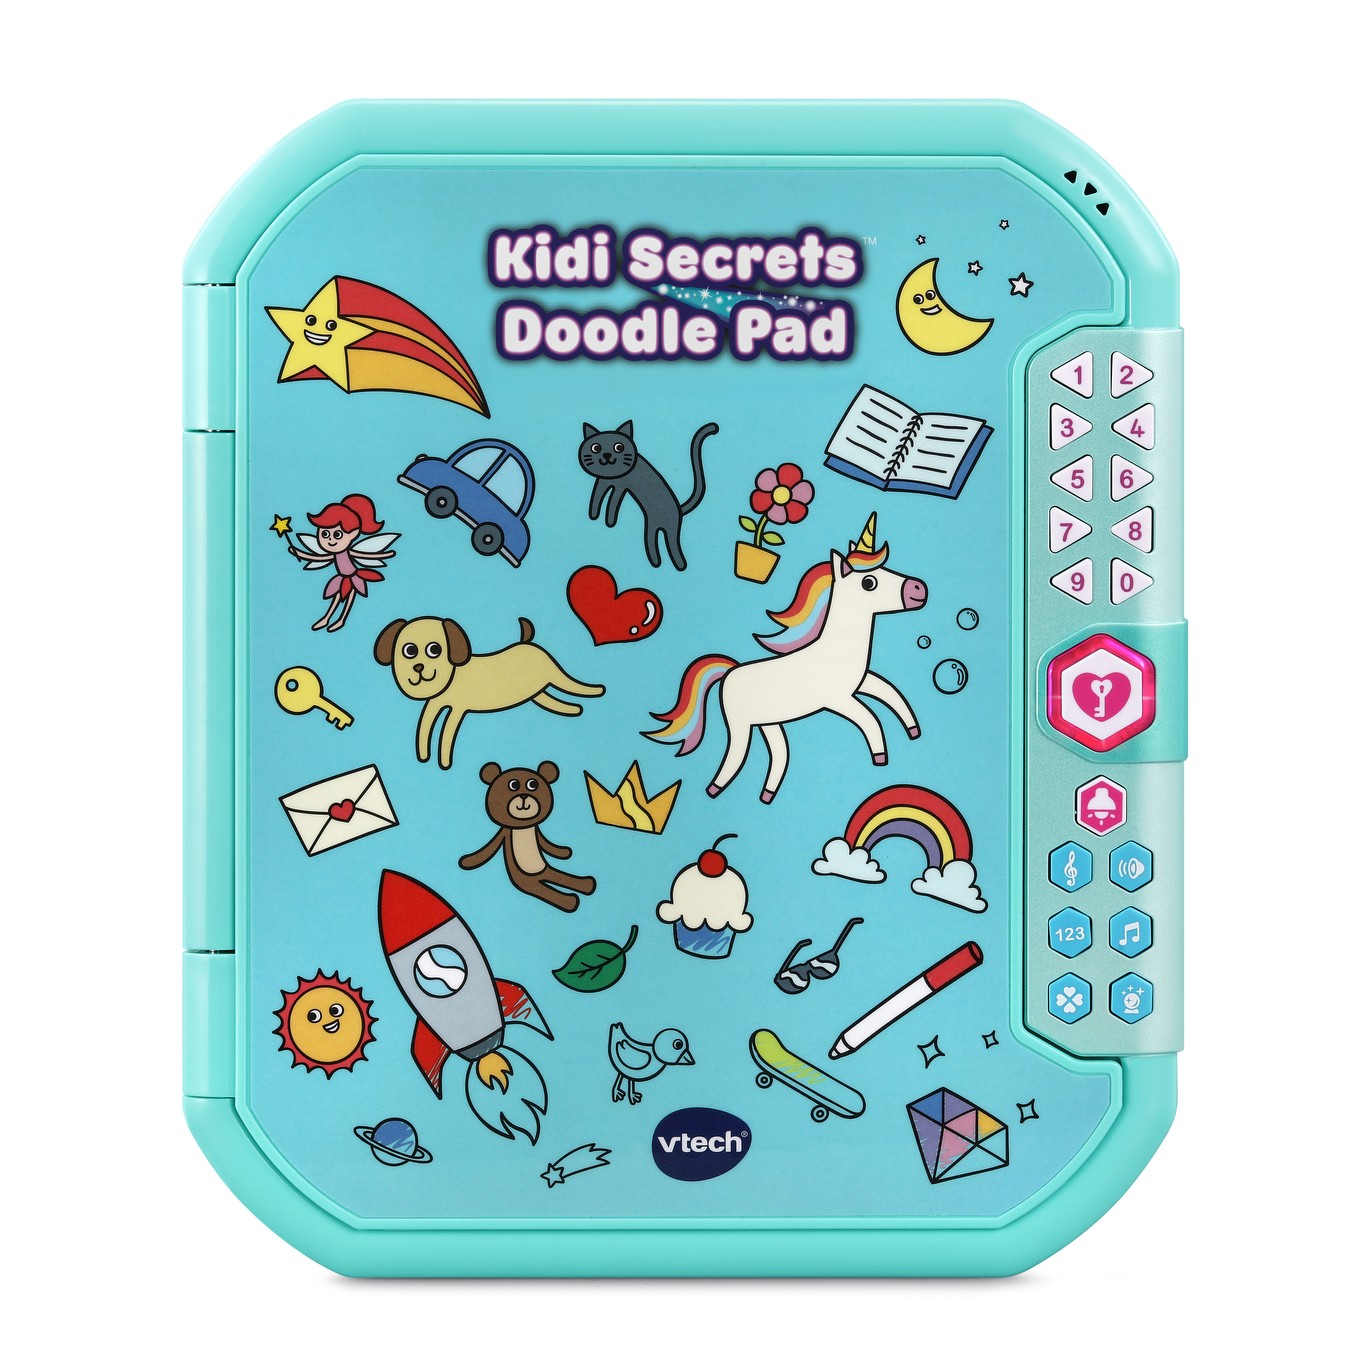 Interactive Toy Vtech Kidi Secrets Locker (FR)